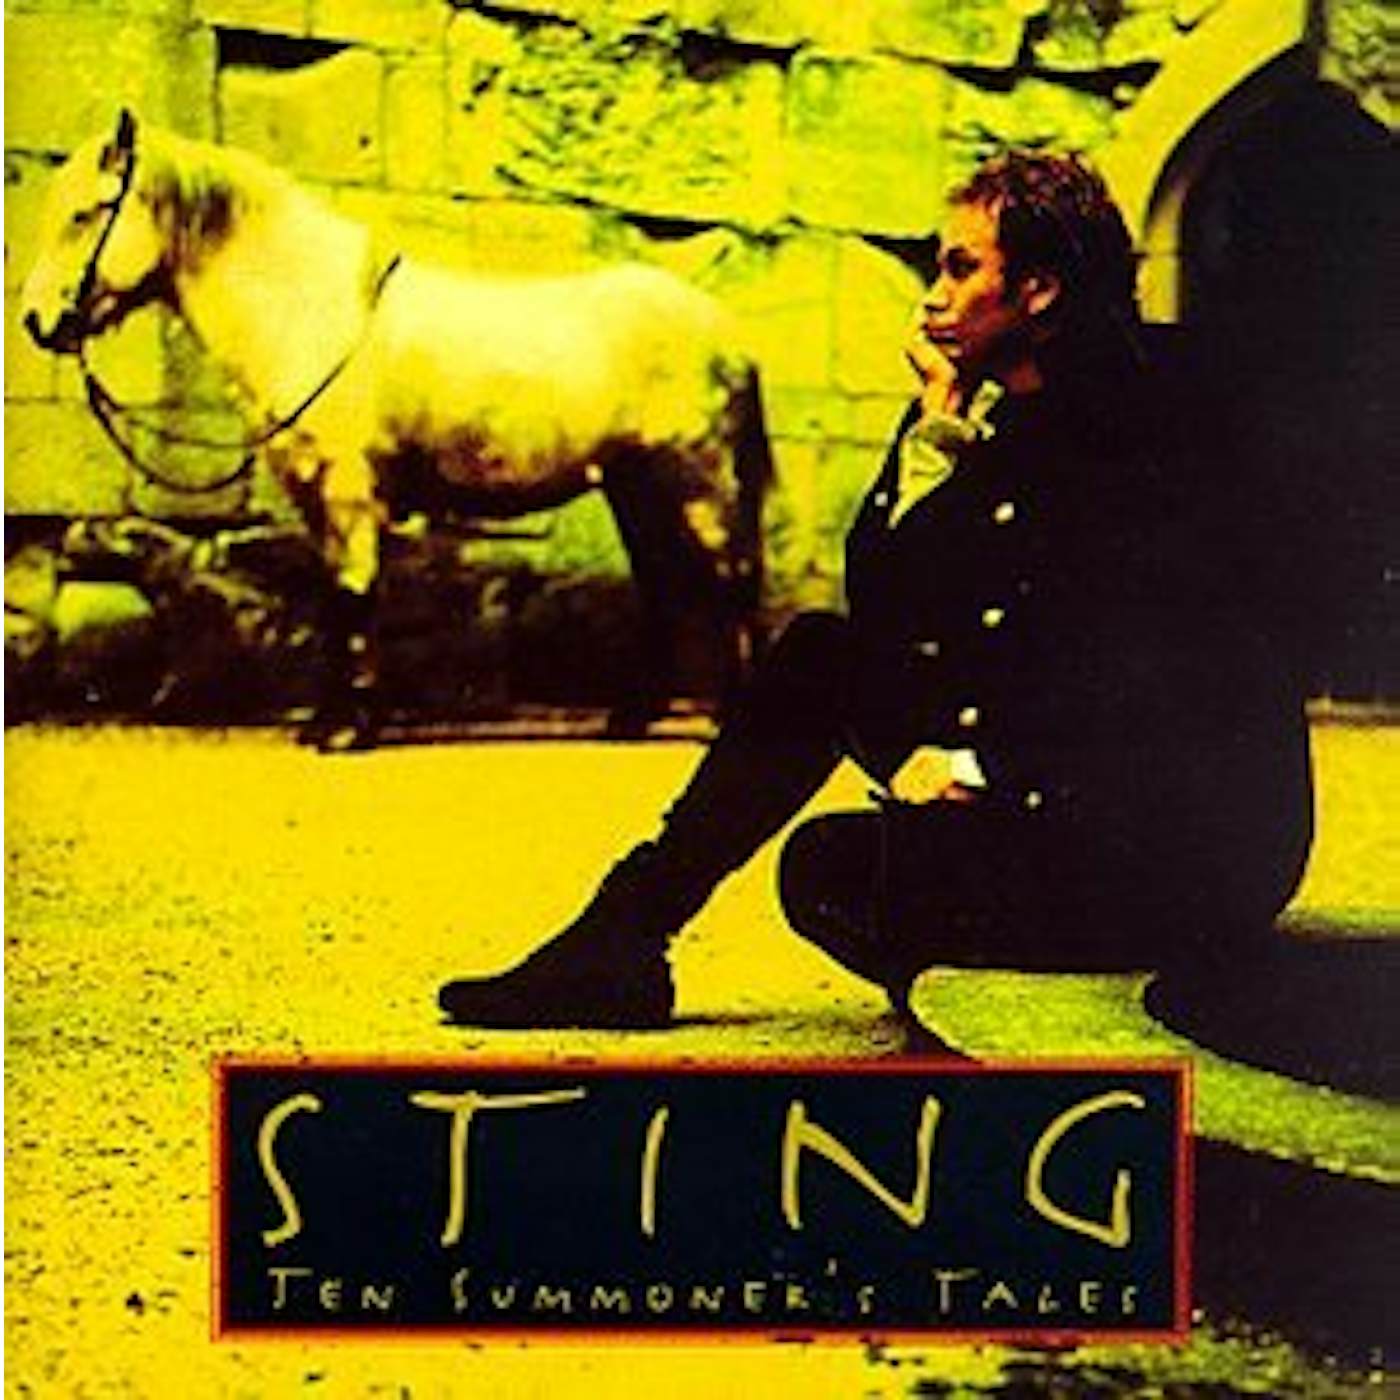 Sting TEN SUMMONER'S TALES (JEWEL BOX) CD